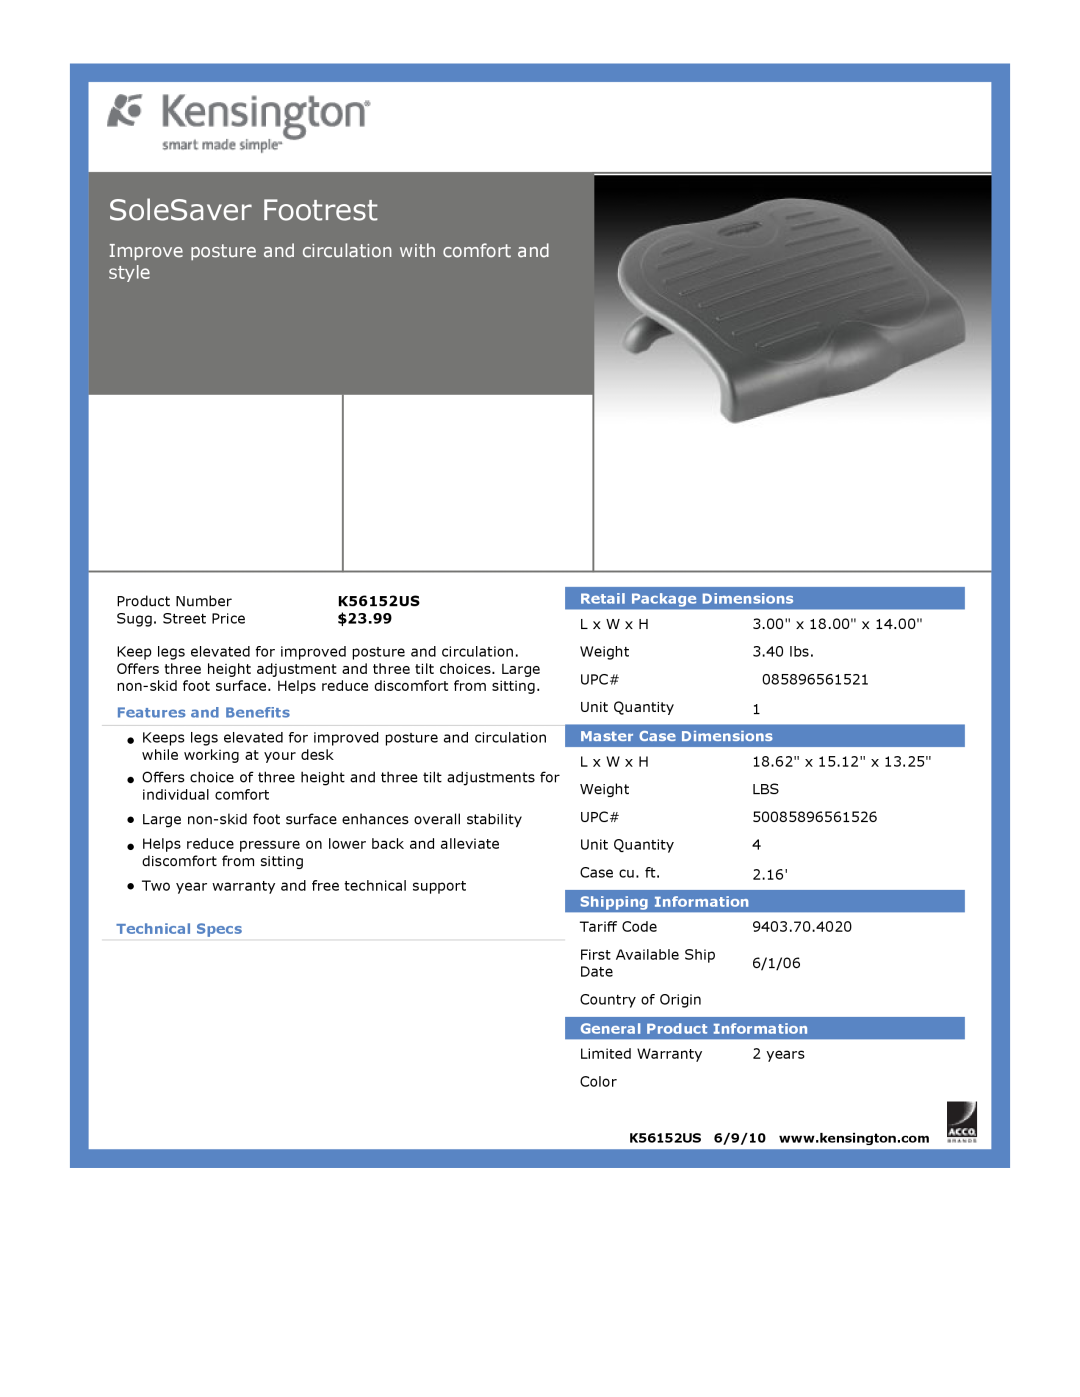 Kensington EU64325 dimensions SoleSaver Footrest, $23.99, Features and Benefits, Technical Specs, Retail Package Dimensions 